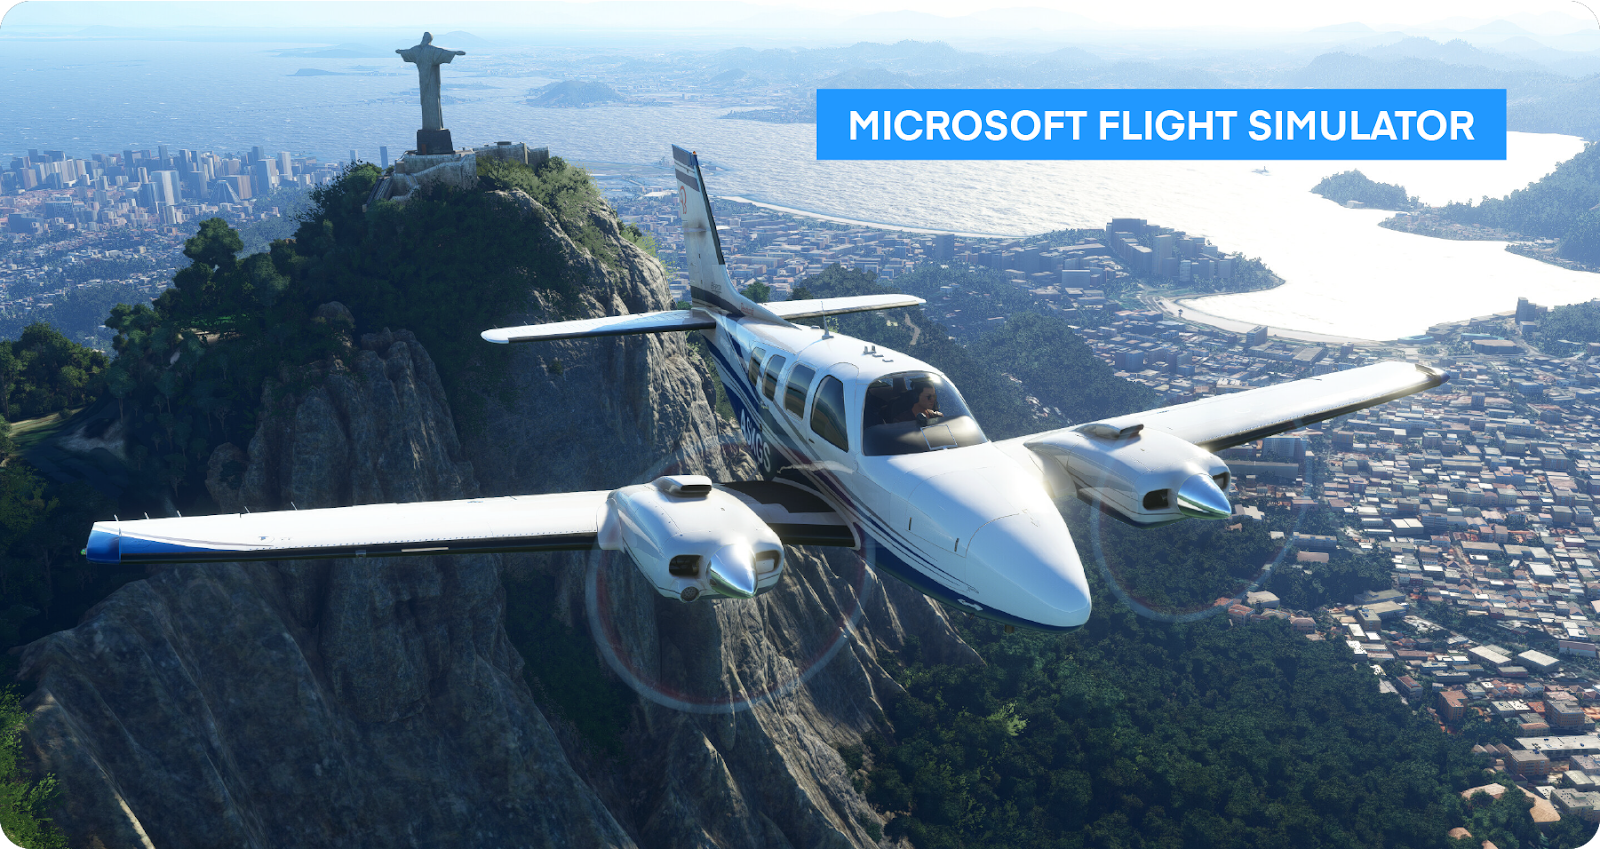 Microsoft Flight Simulator screenshot.